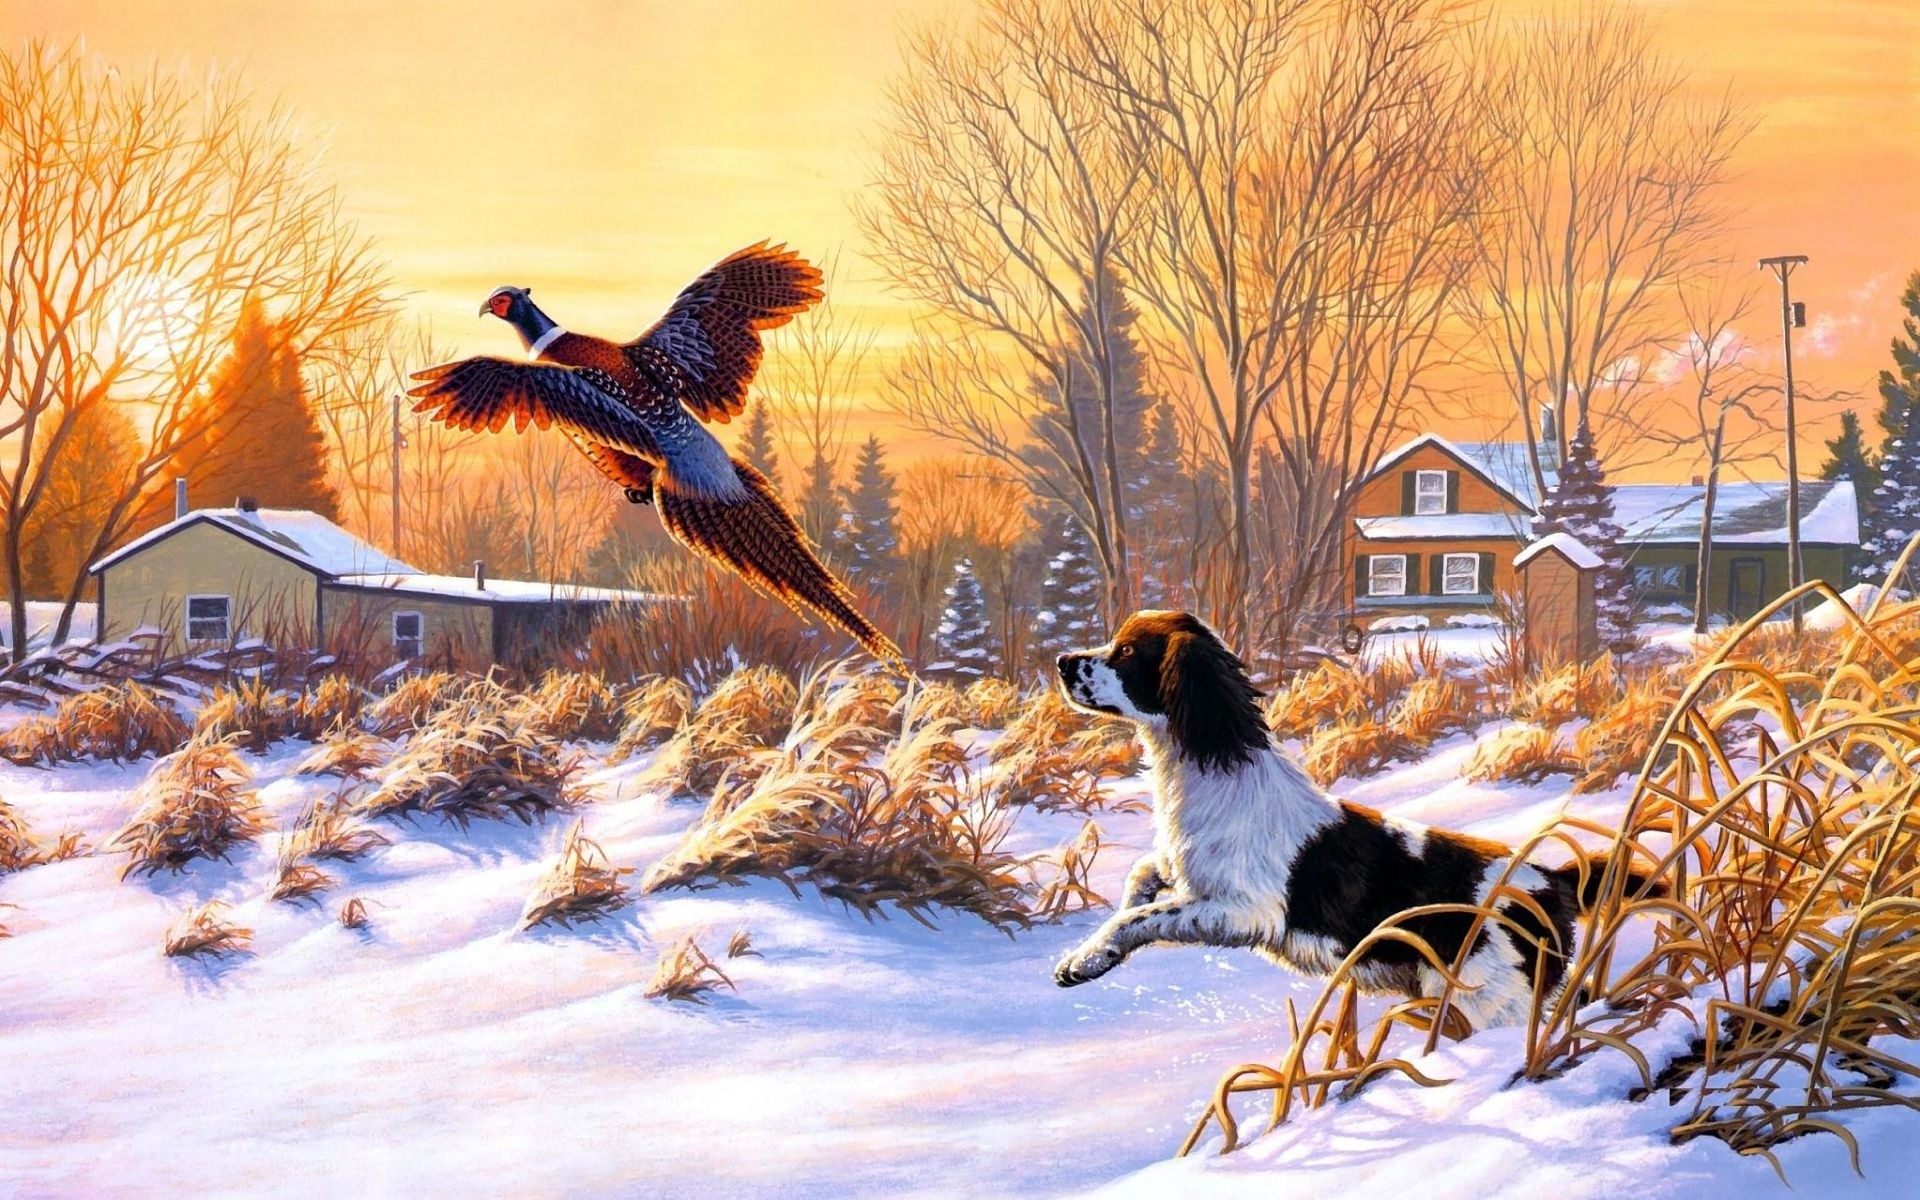 1920x1200 Frank-Mittelstadt-Getting-Up-art-nature-winter-snow-hunting-dog-bird -fly-sunrise-painting.